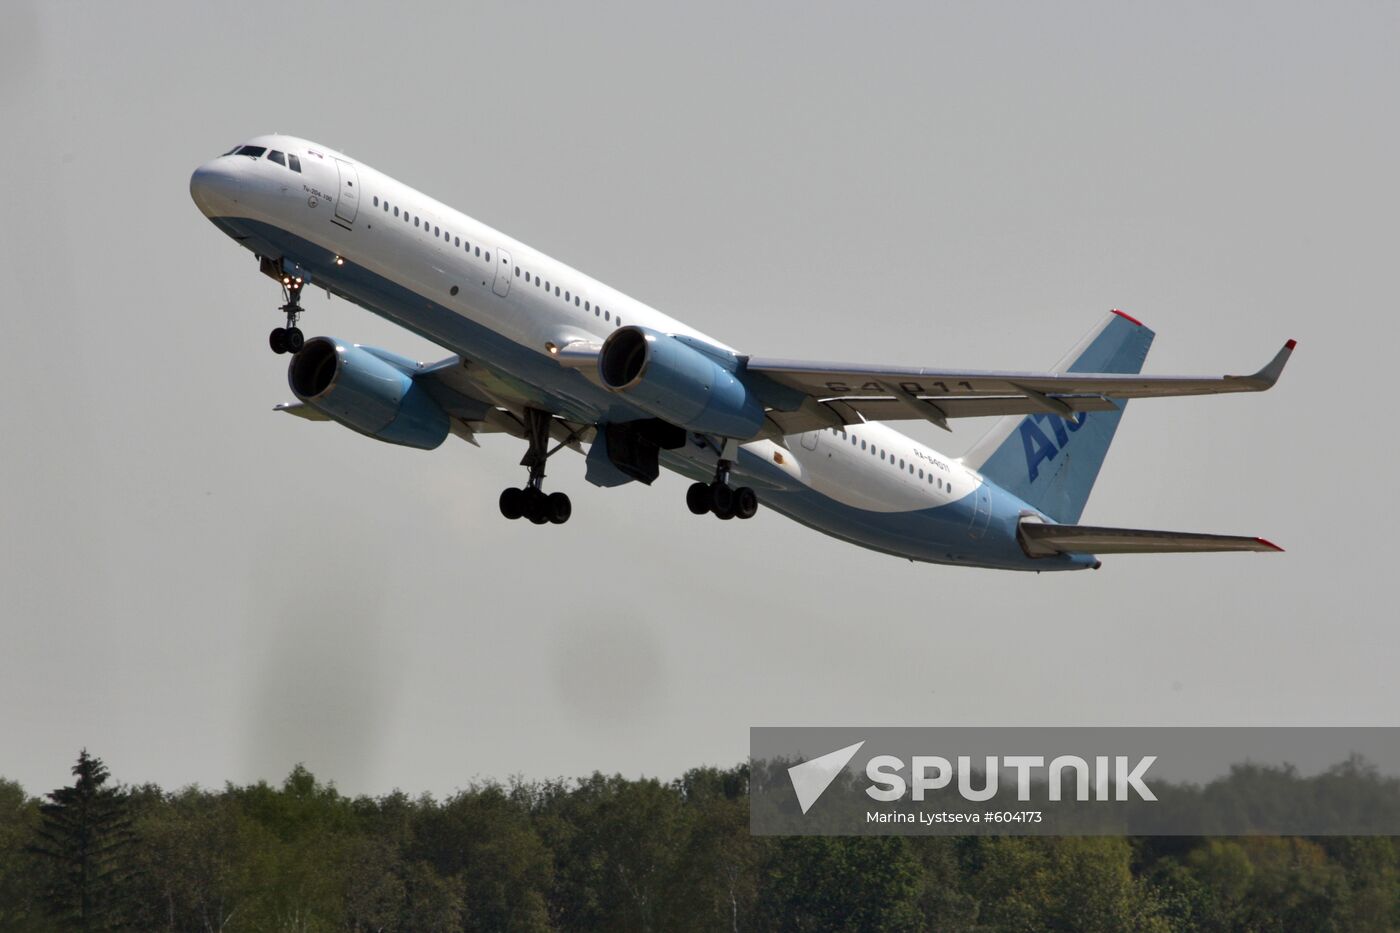 Emergency landing of Aviastar Tu plane